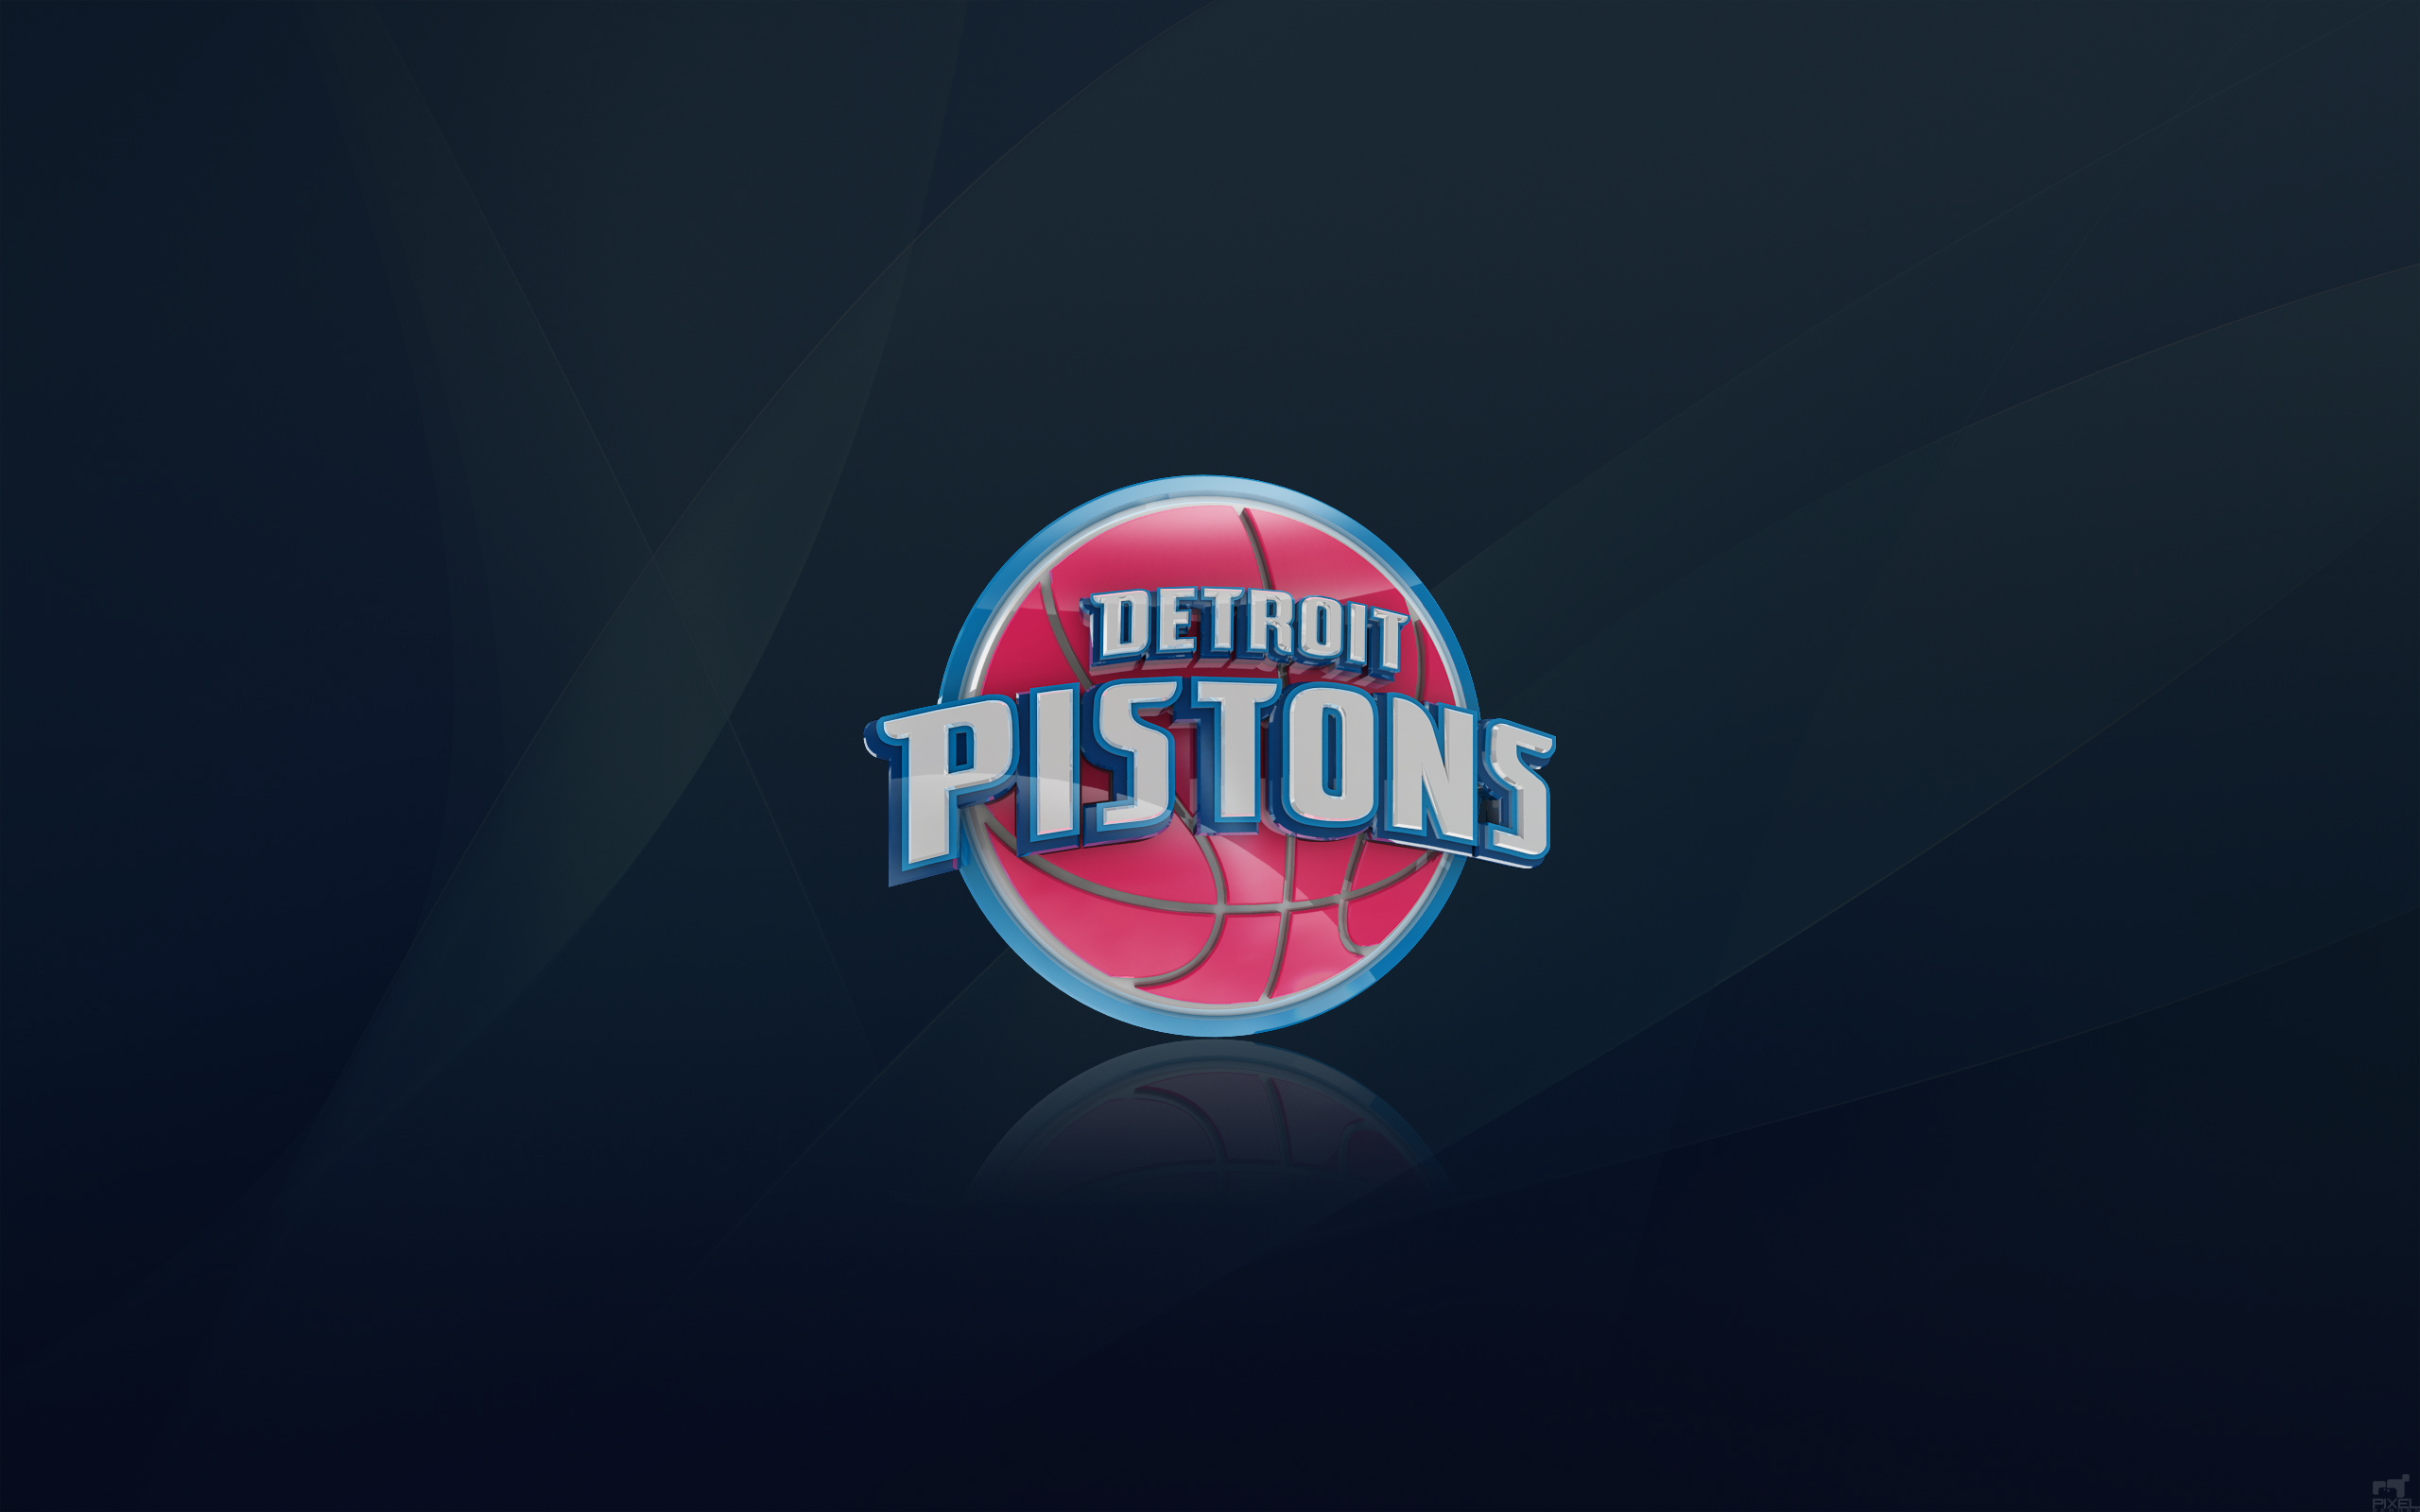 Detroit pistons. Детройт Пистонс лого. Эмблема баскетбол Детройт Пистонс. Детройт лого НБА. Логотипы баскетбольных команд.